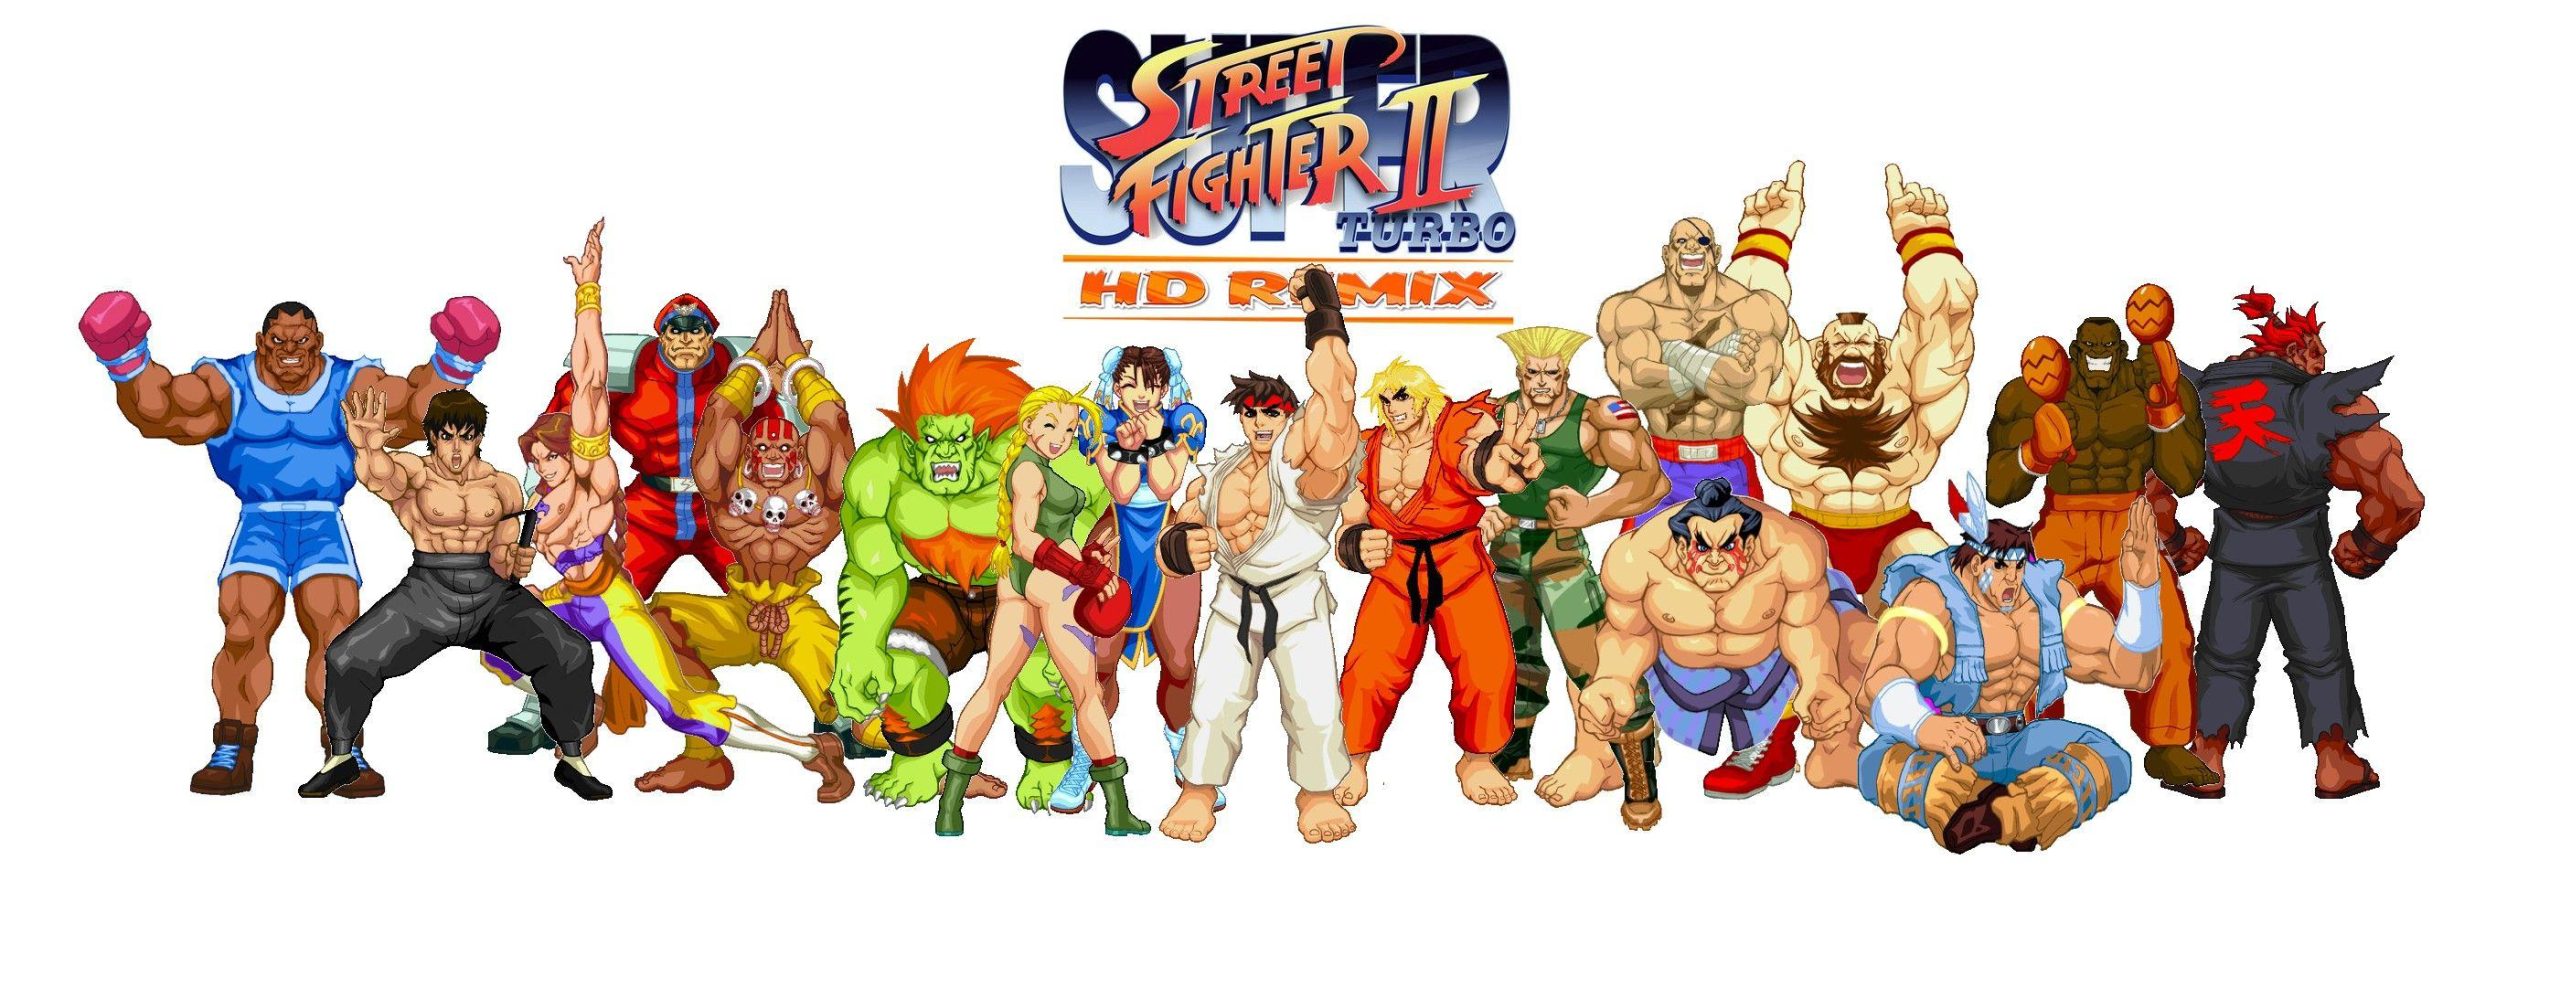 Street Fighter II The World Warrior Wallpaper 4k